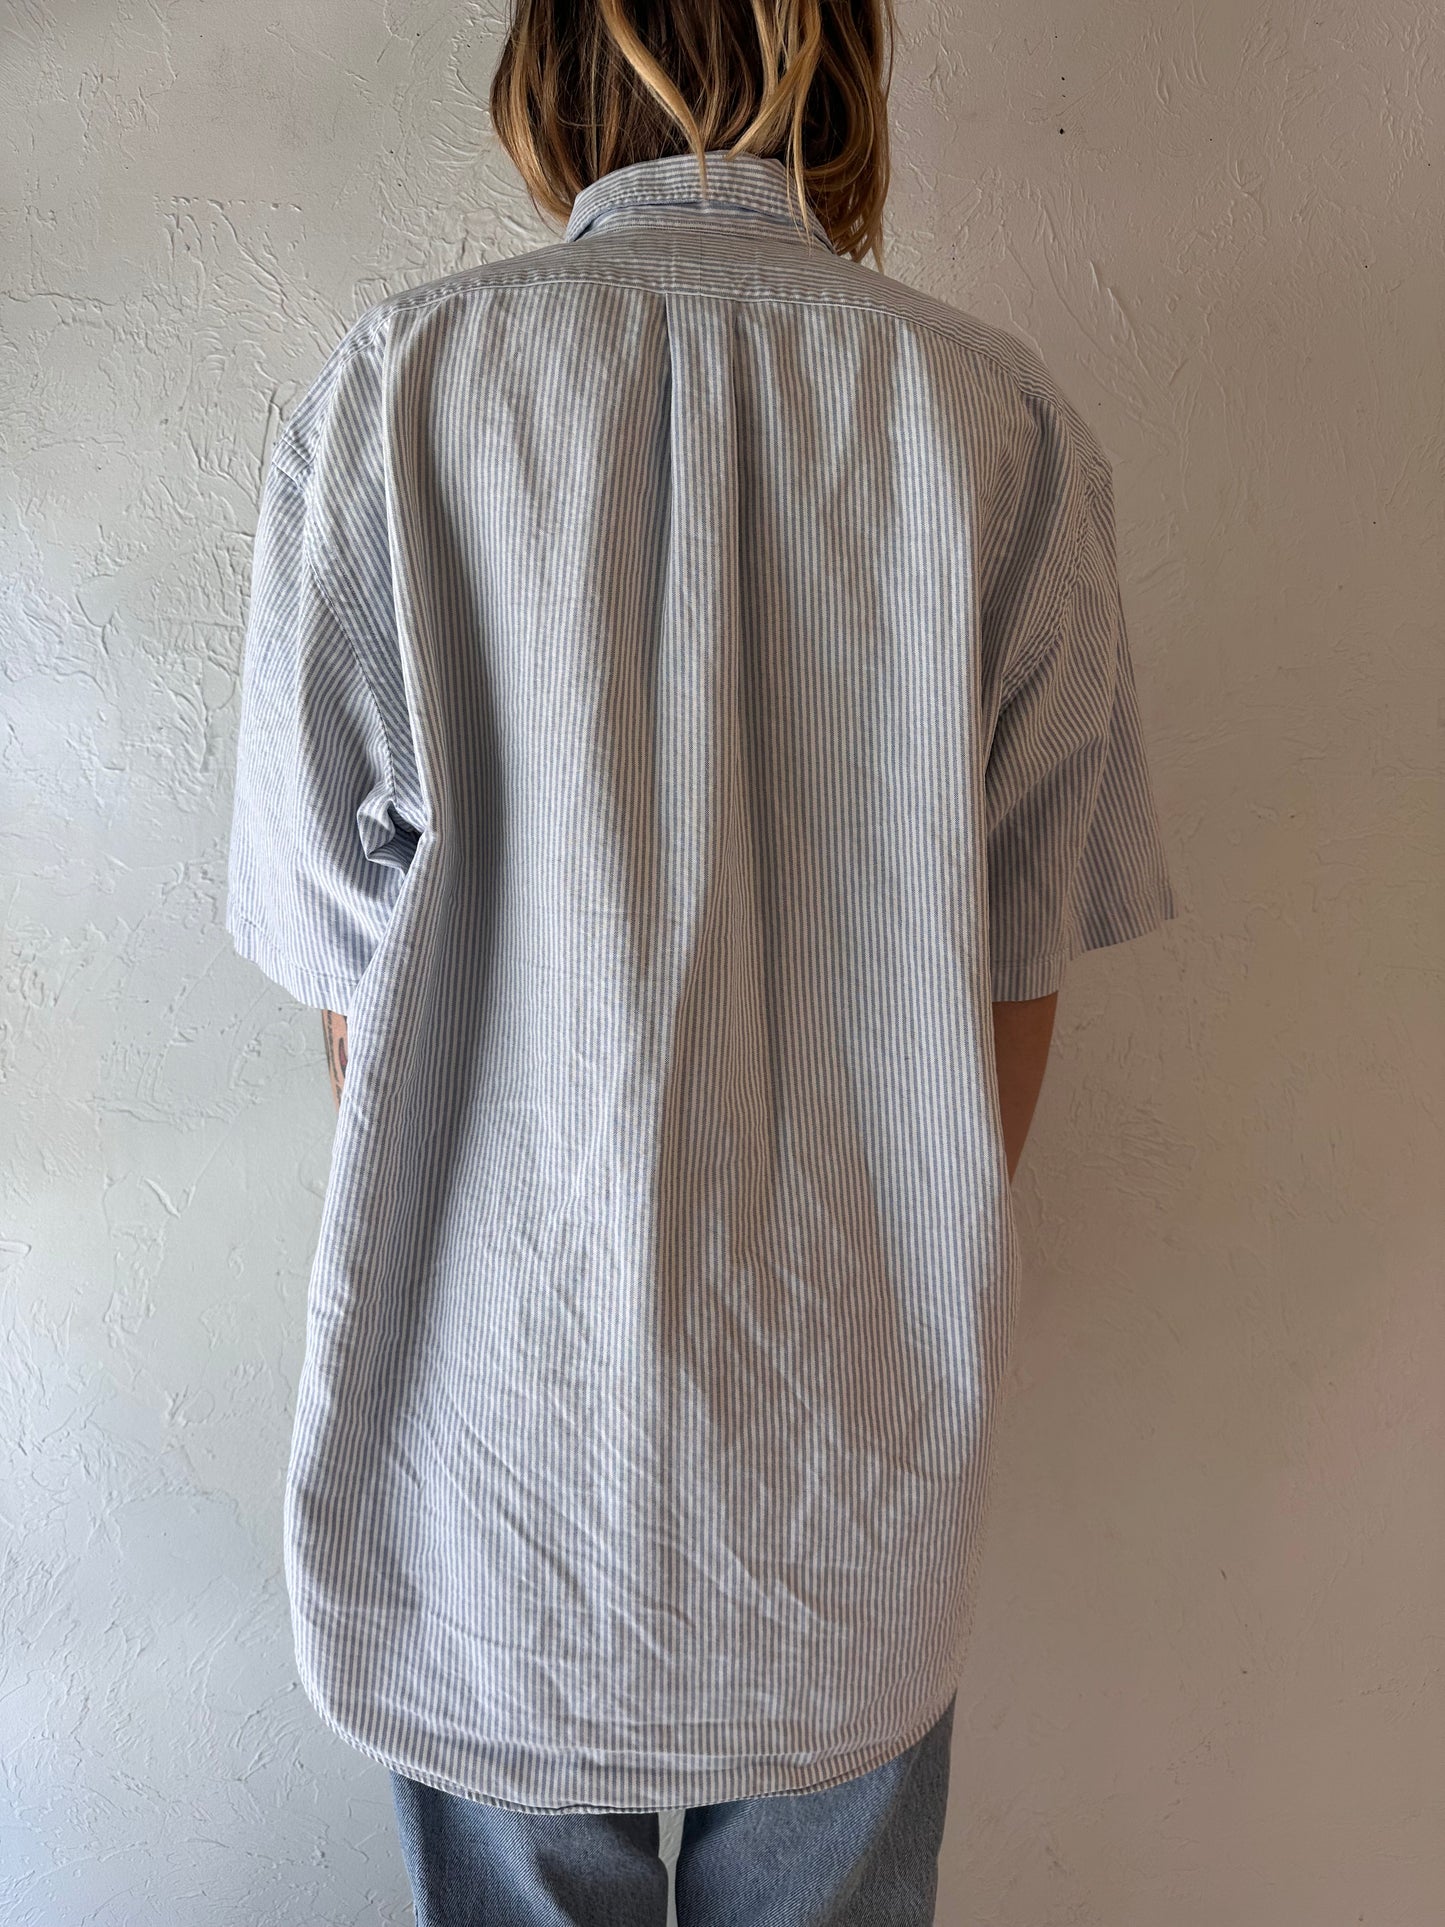 Y2k 'Ralph Lauren' Striped Short Sleeve Button Up Shirt / Large